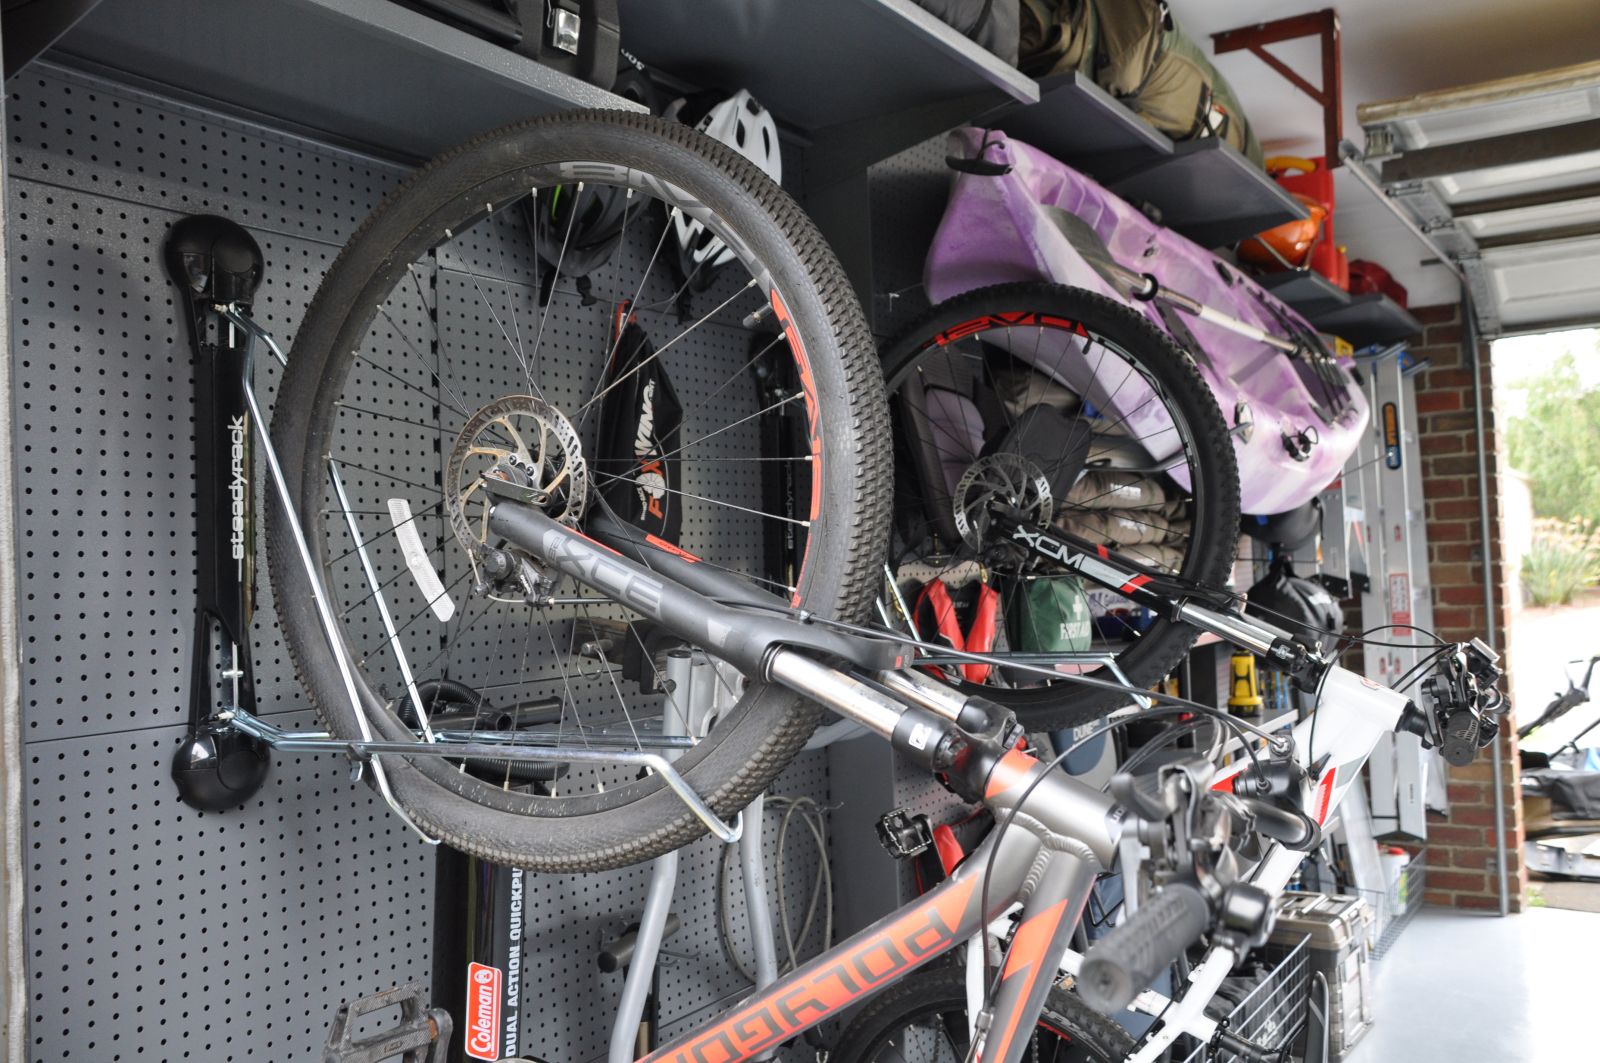 Pivoting bike rack on a garage wall